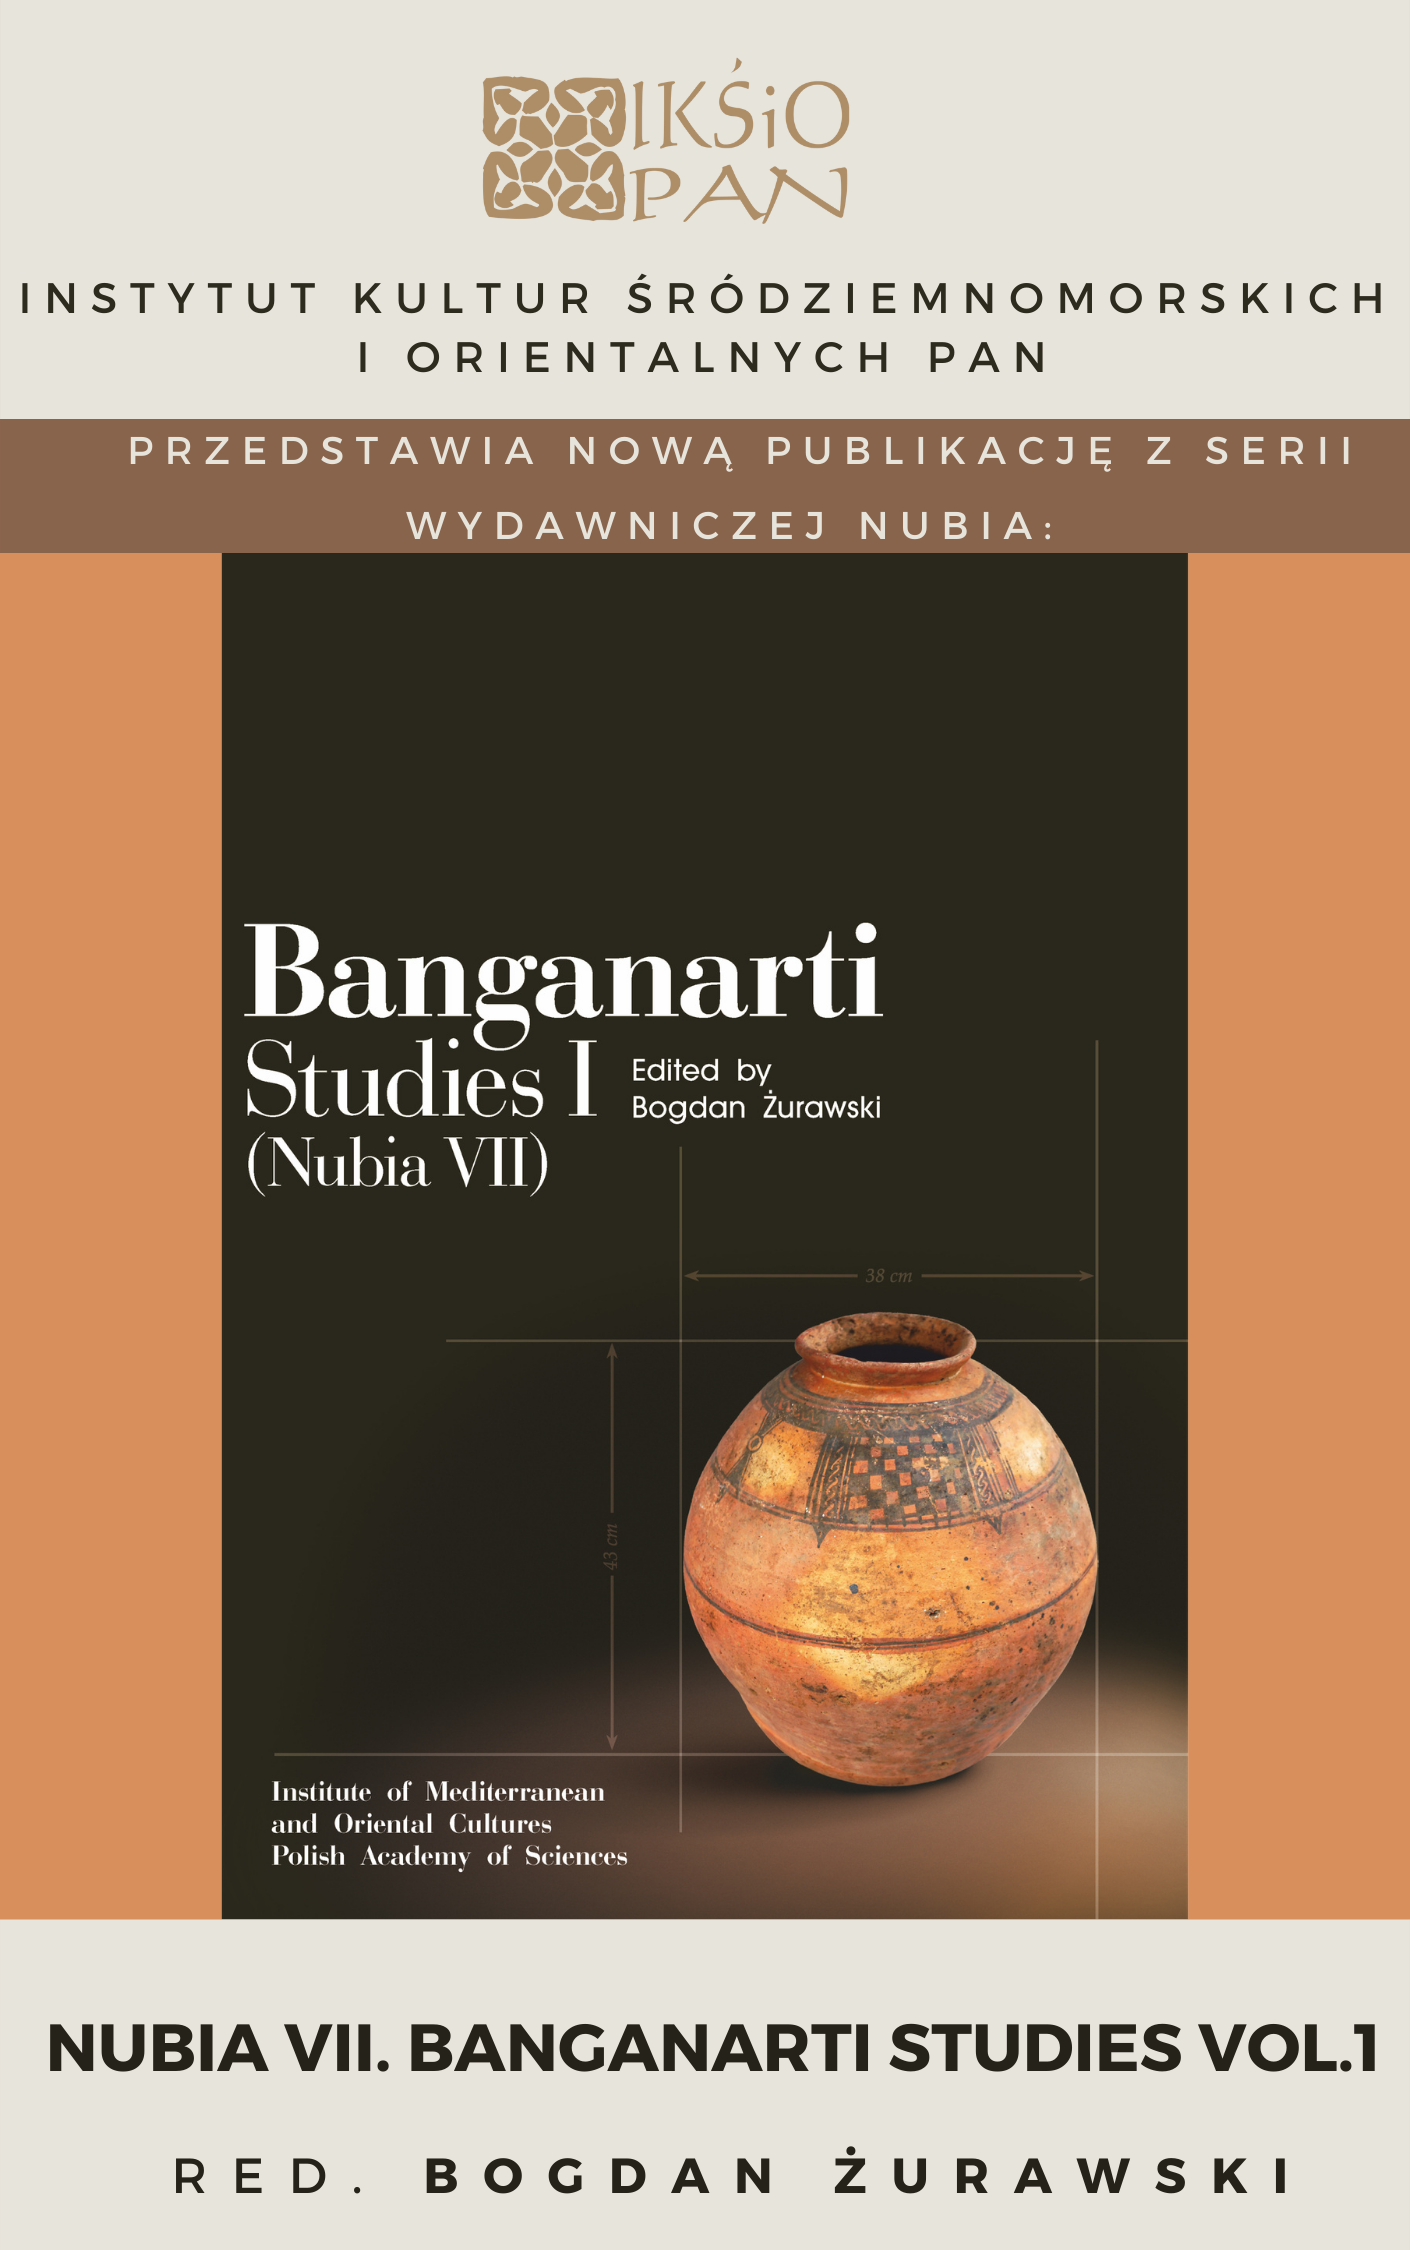 Banganarti Studies